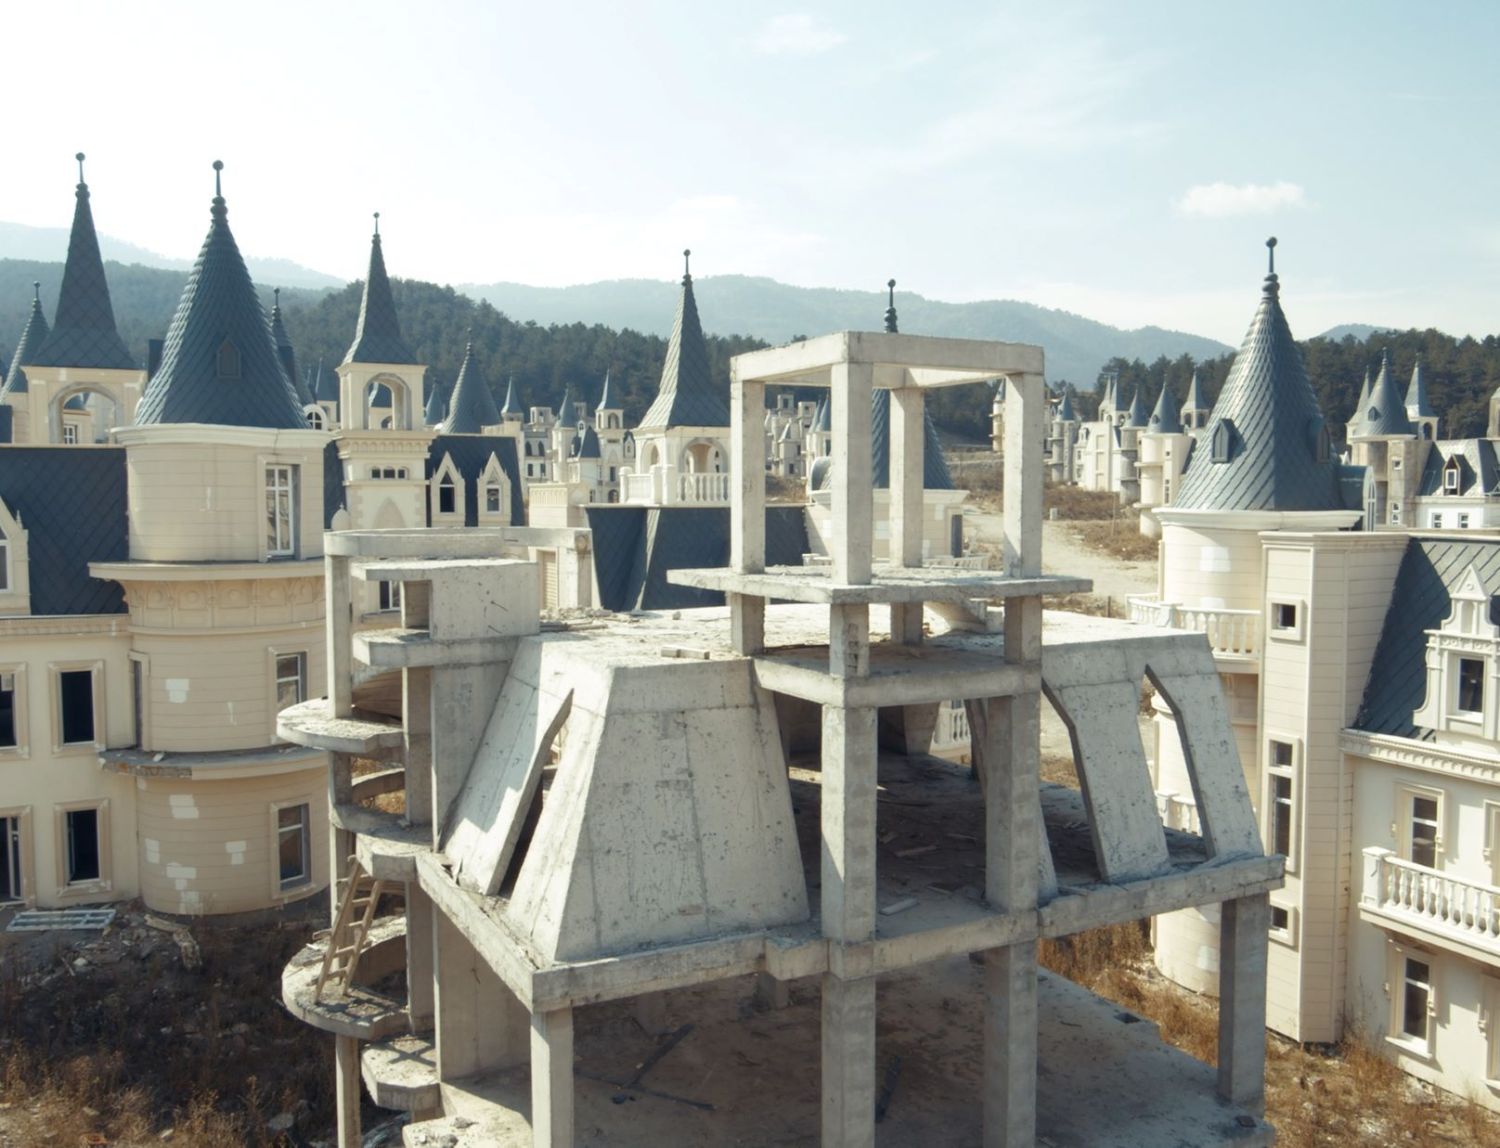 Ghost Town Full Of Disney Castles: The Story Of Burj Al Babas